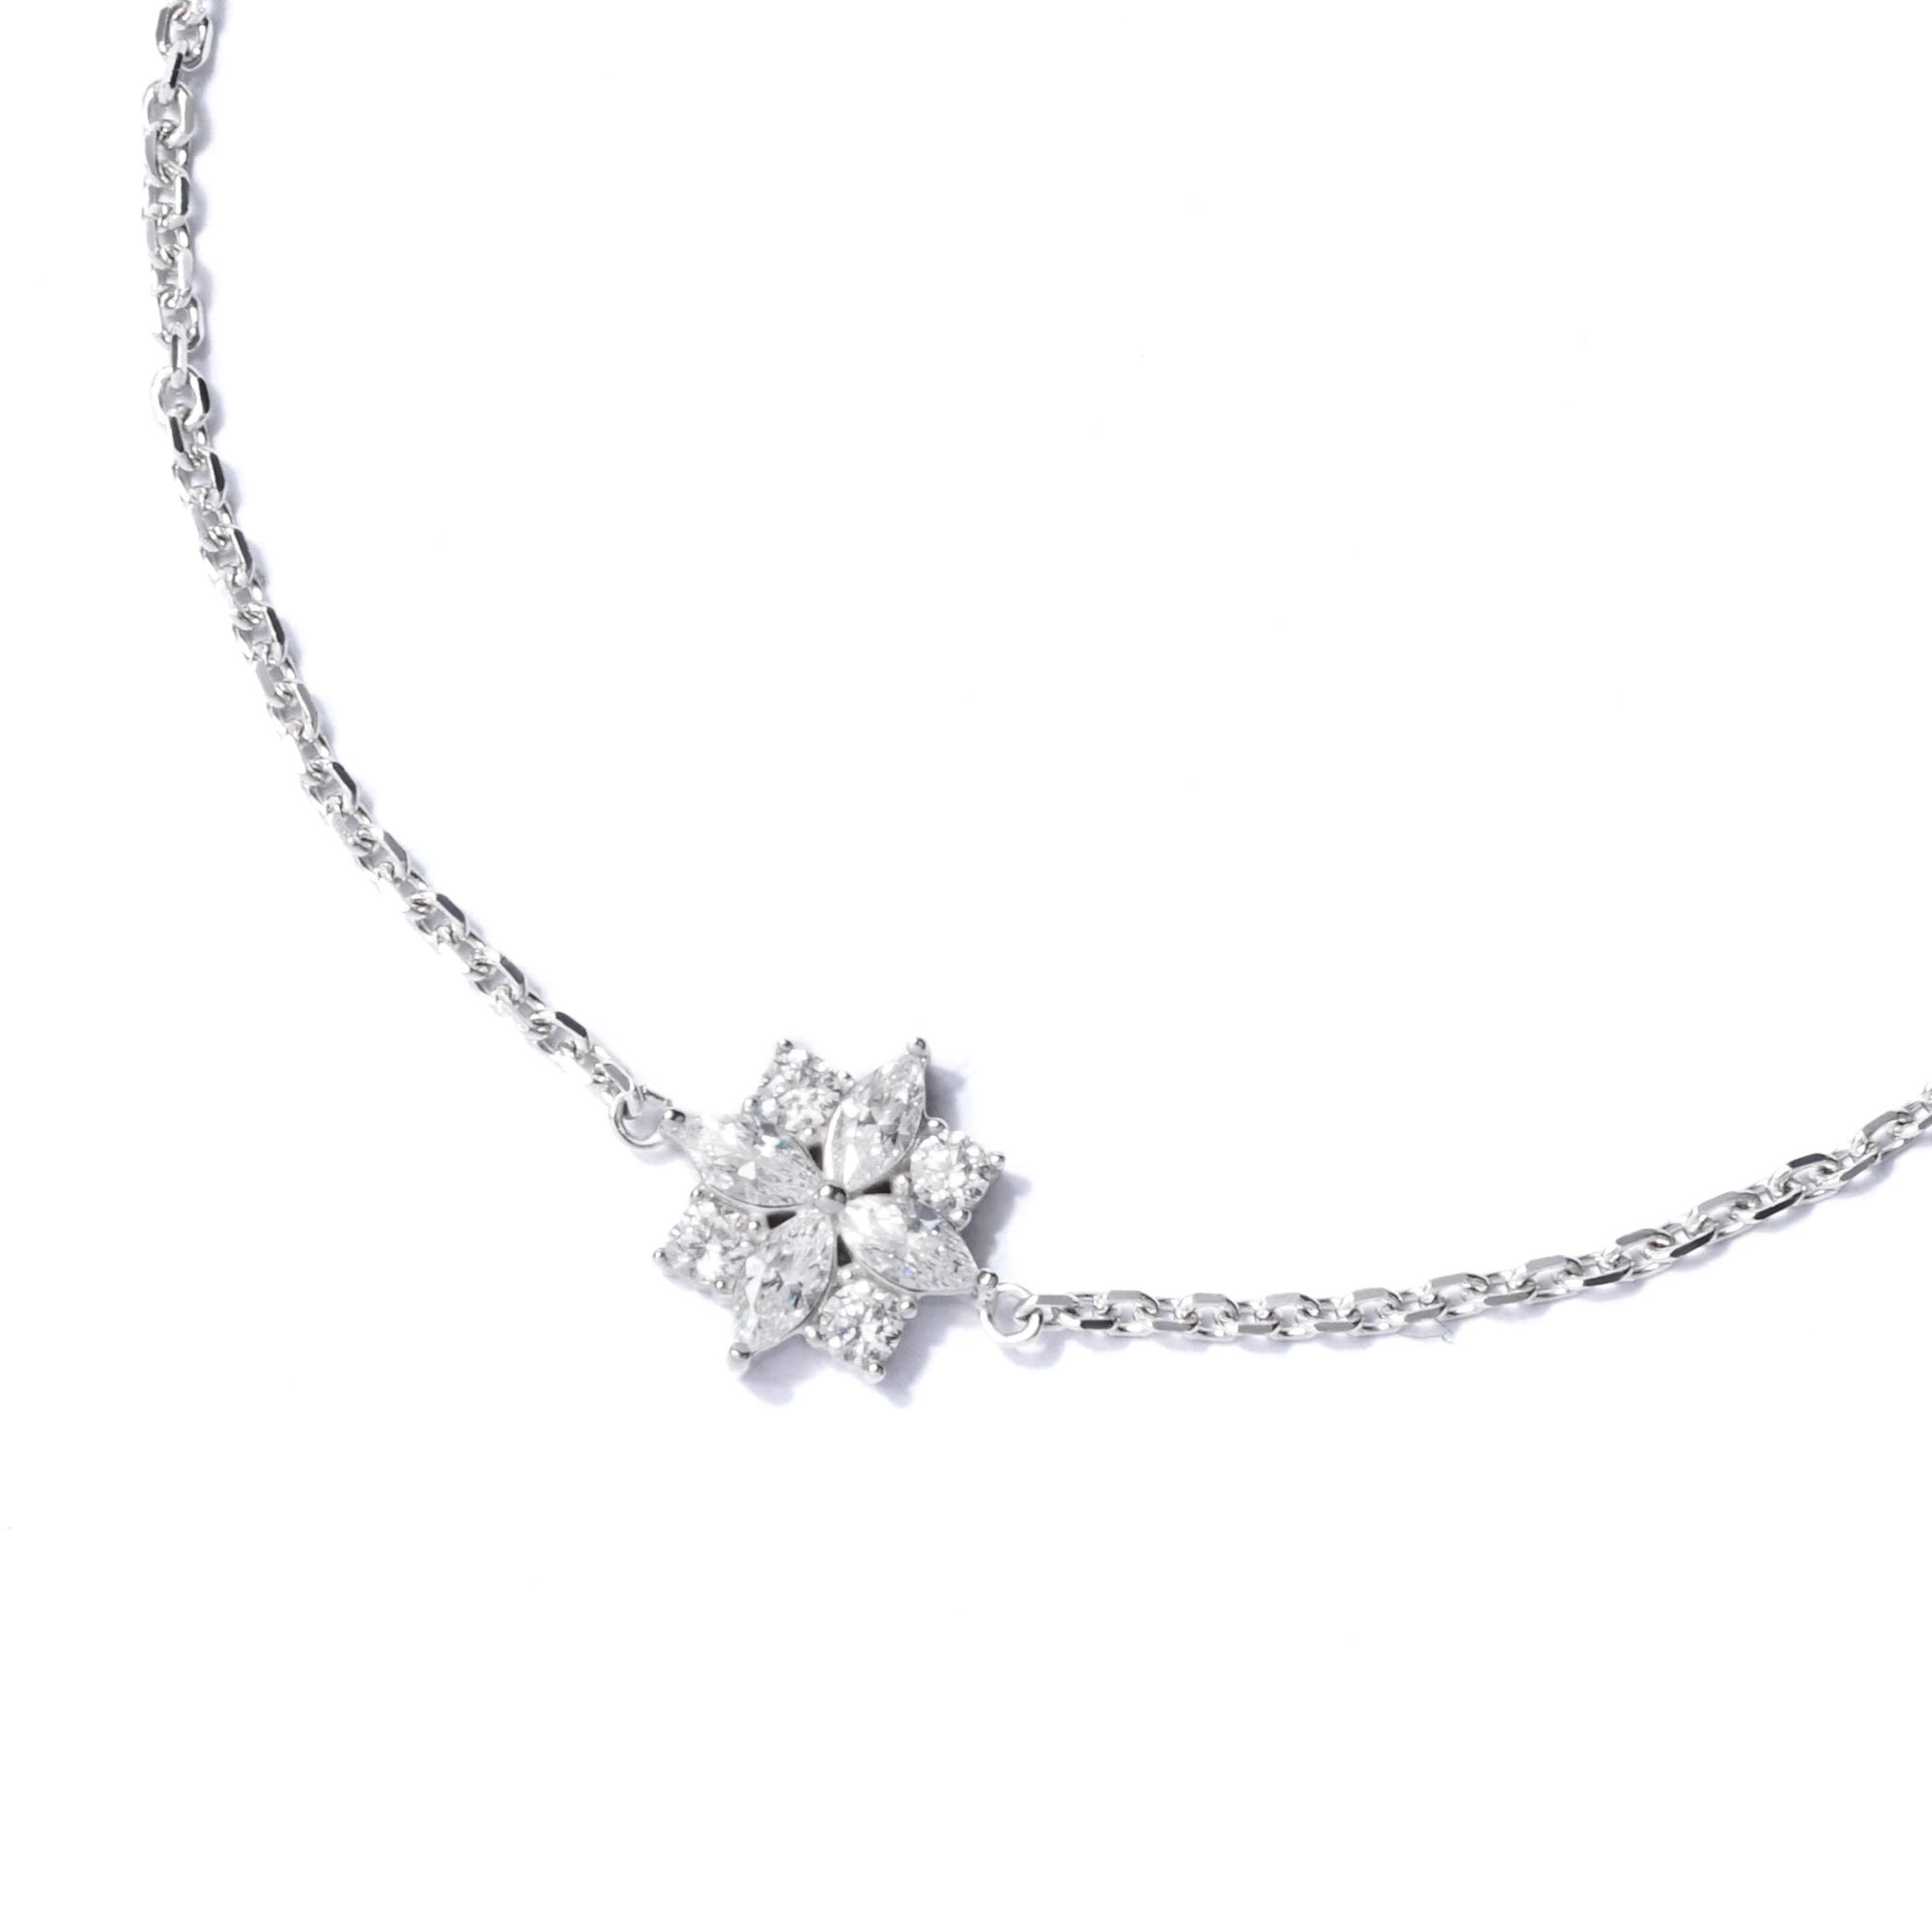 Ailsa Gold Bracelet - Sparkle & Joy - Juene Jewelry